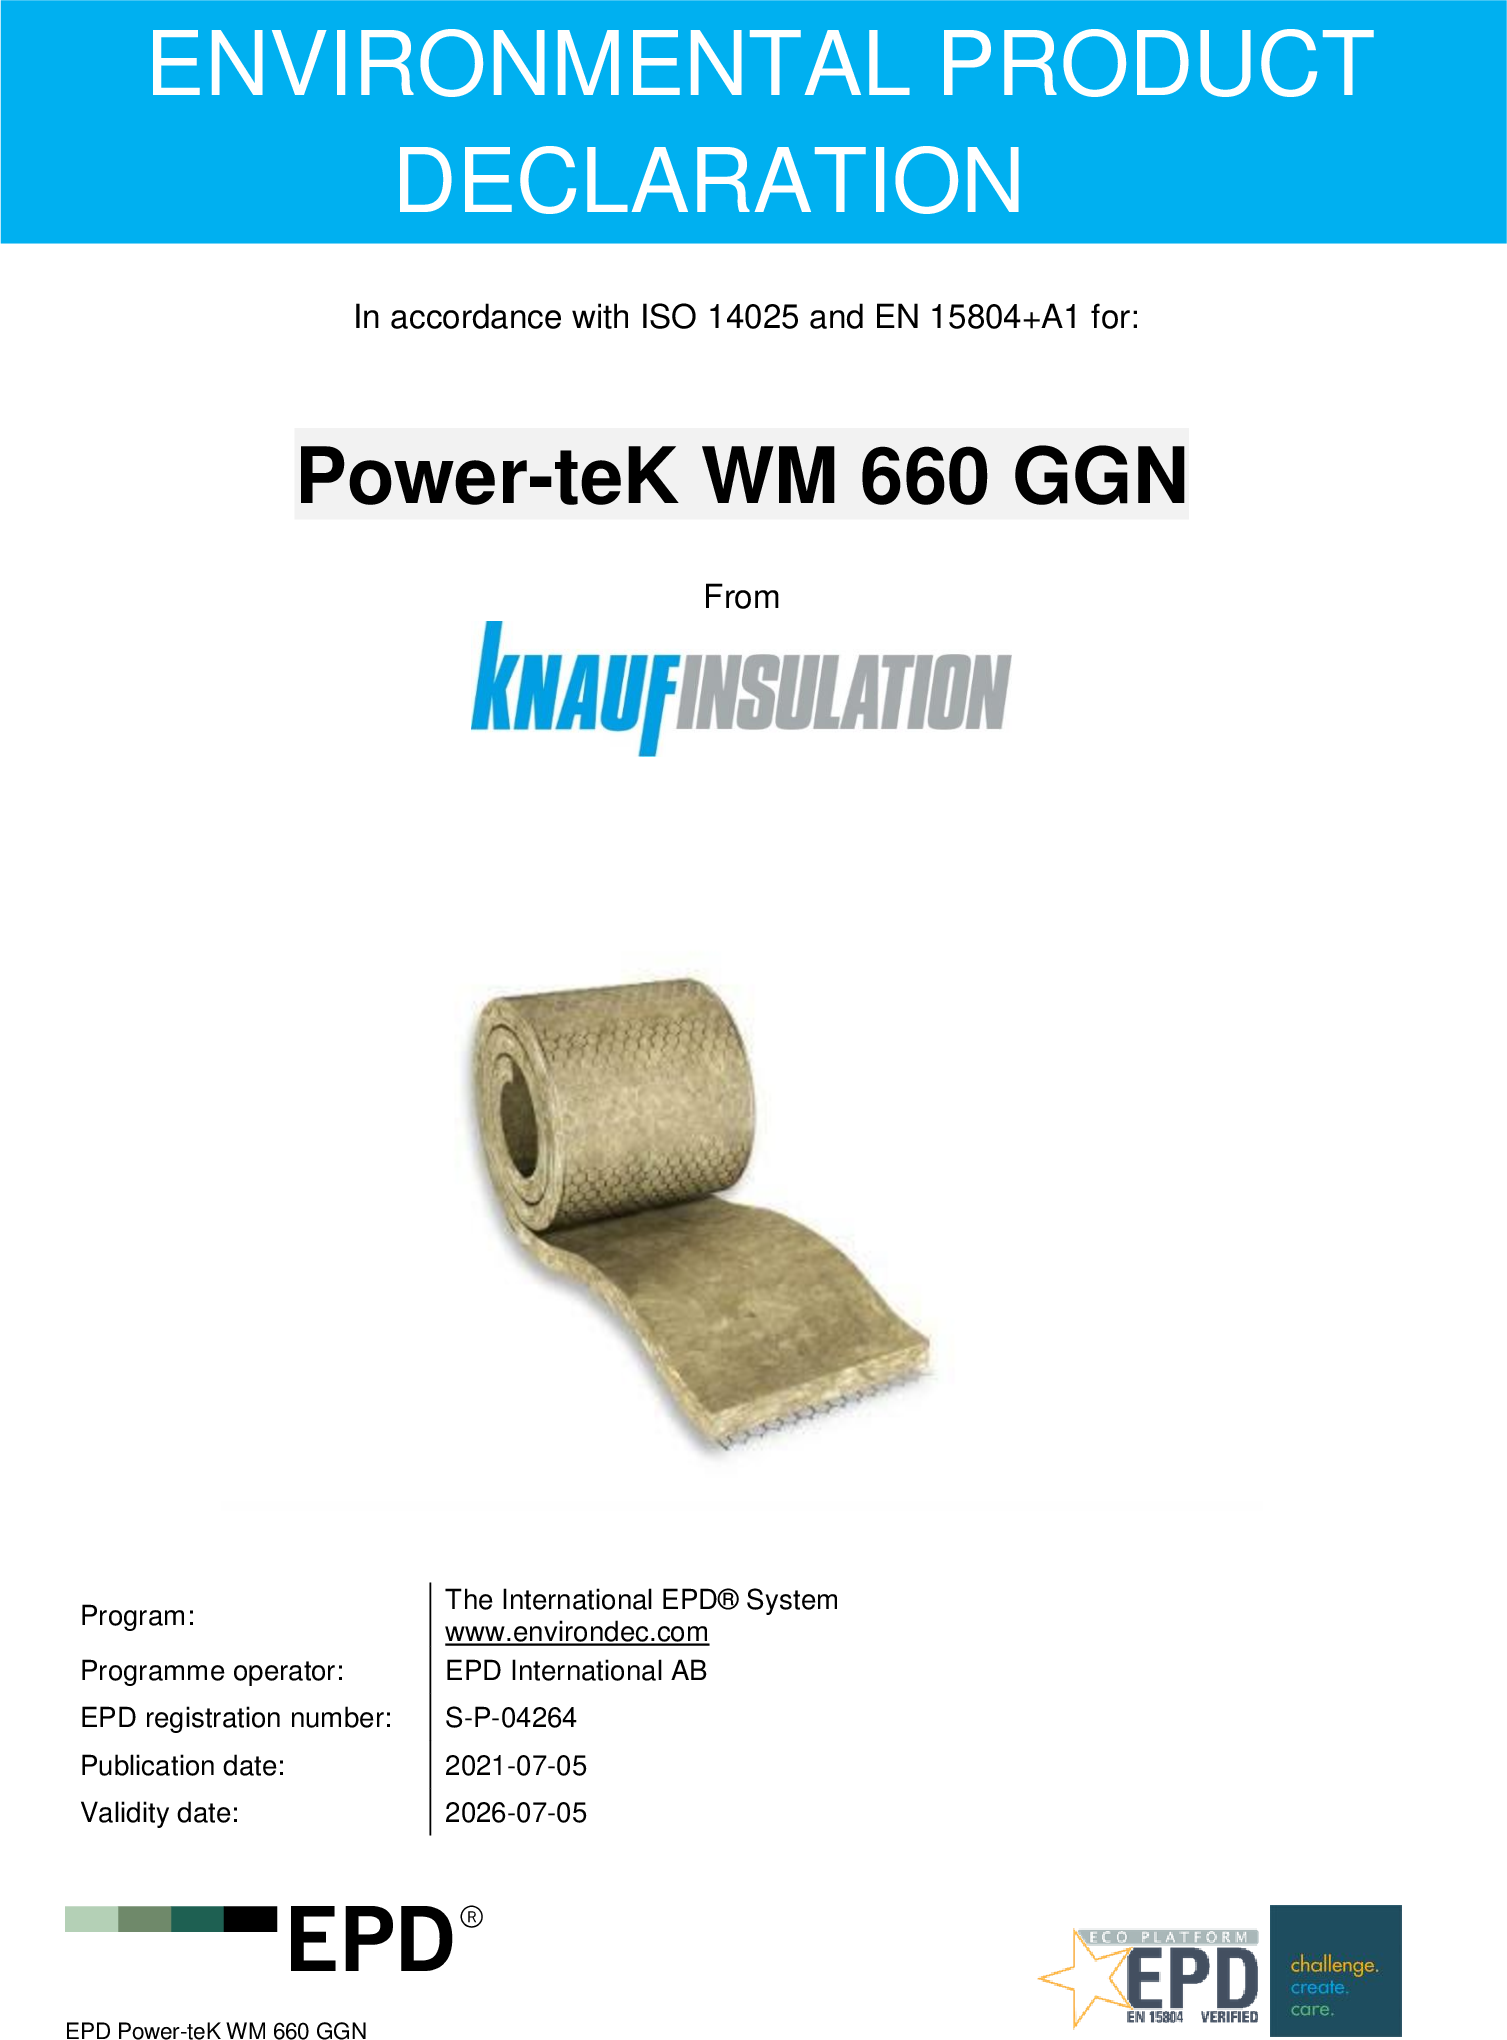 Power-teK WM 660 GGN